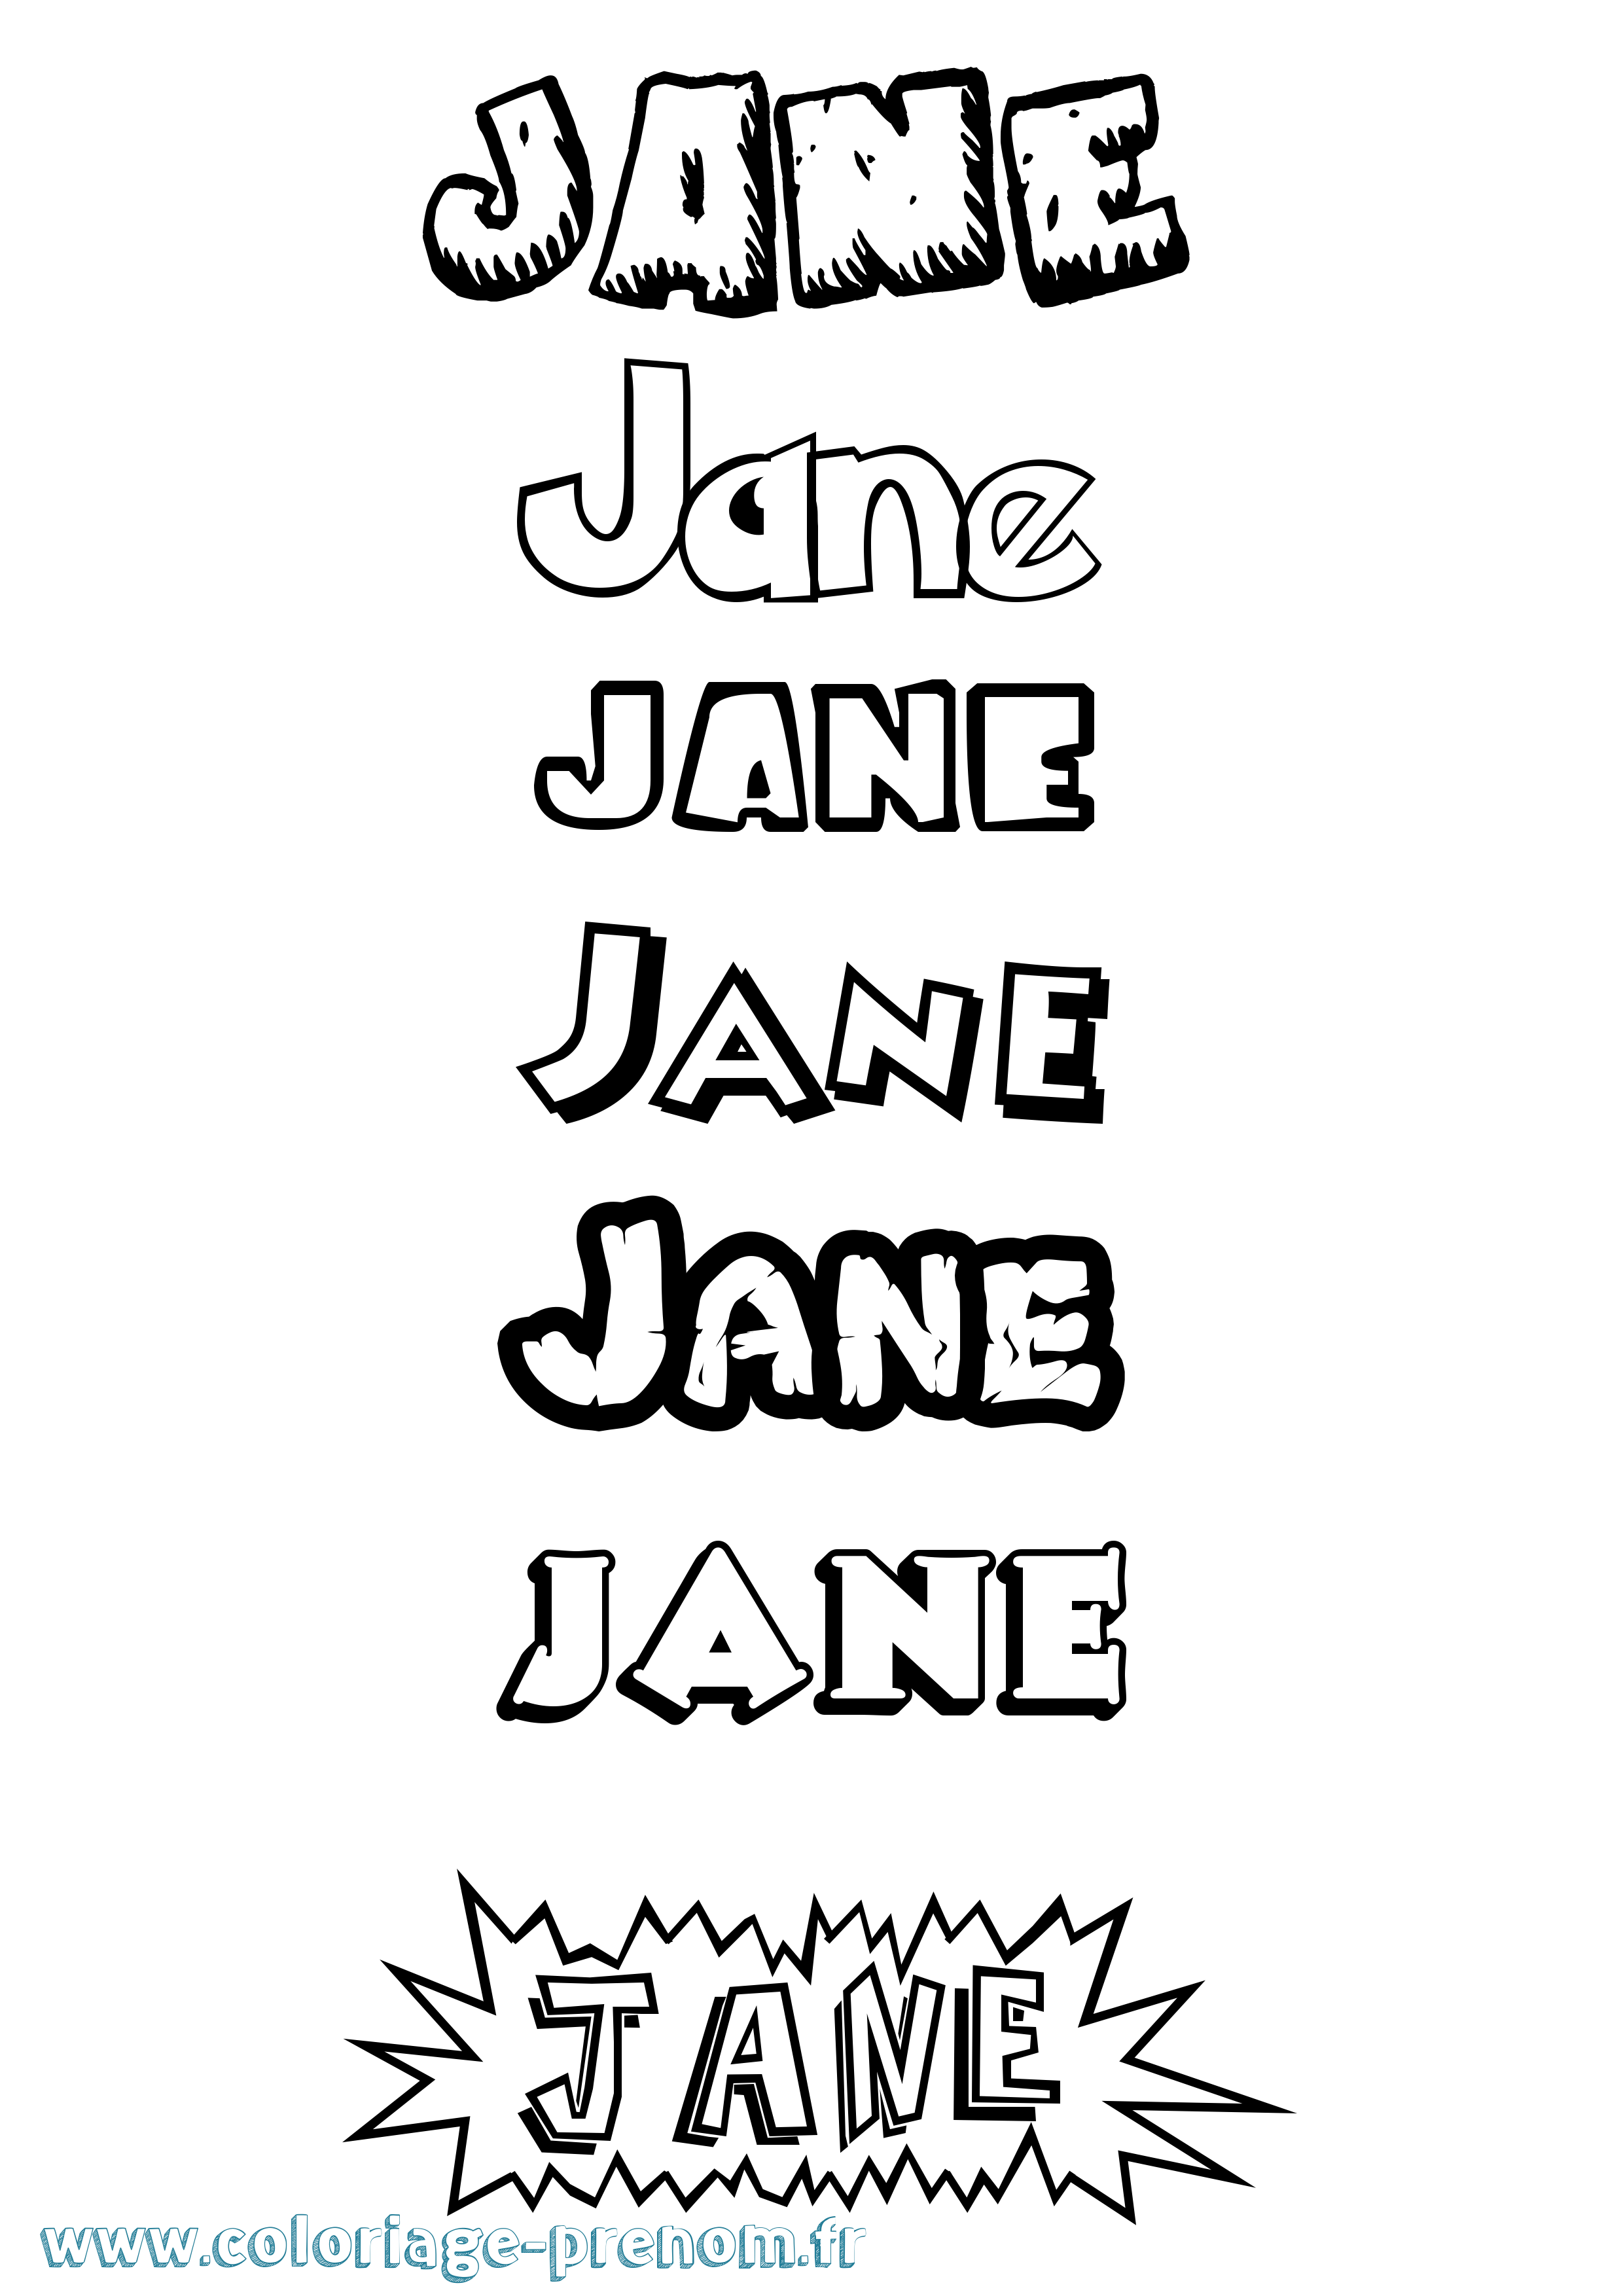 Coloriage prénom Jane